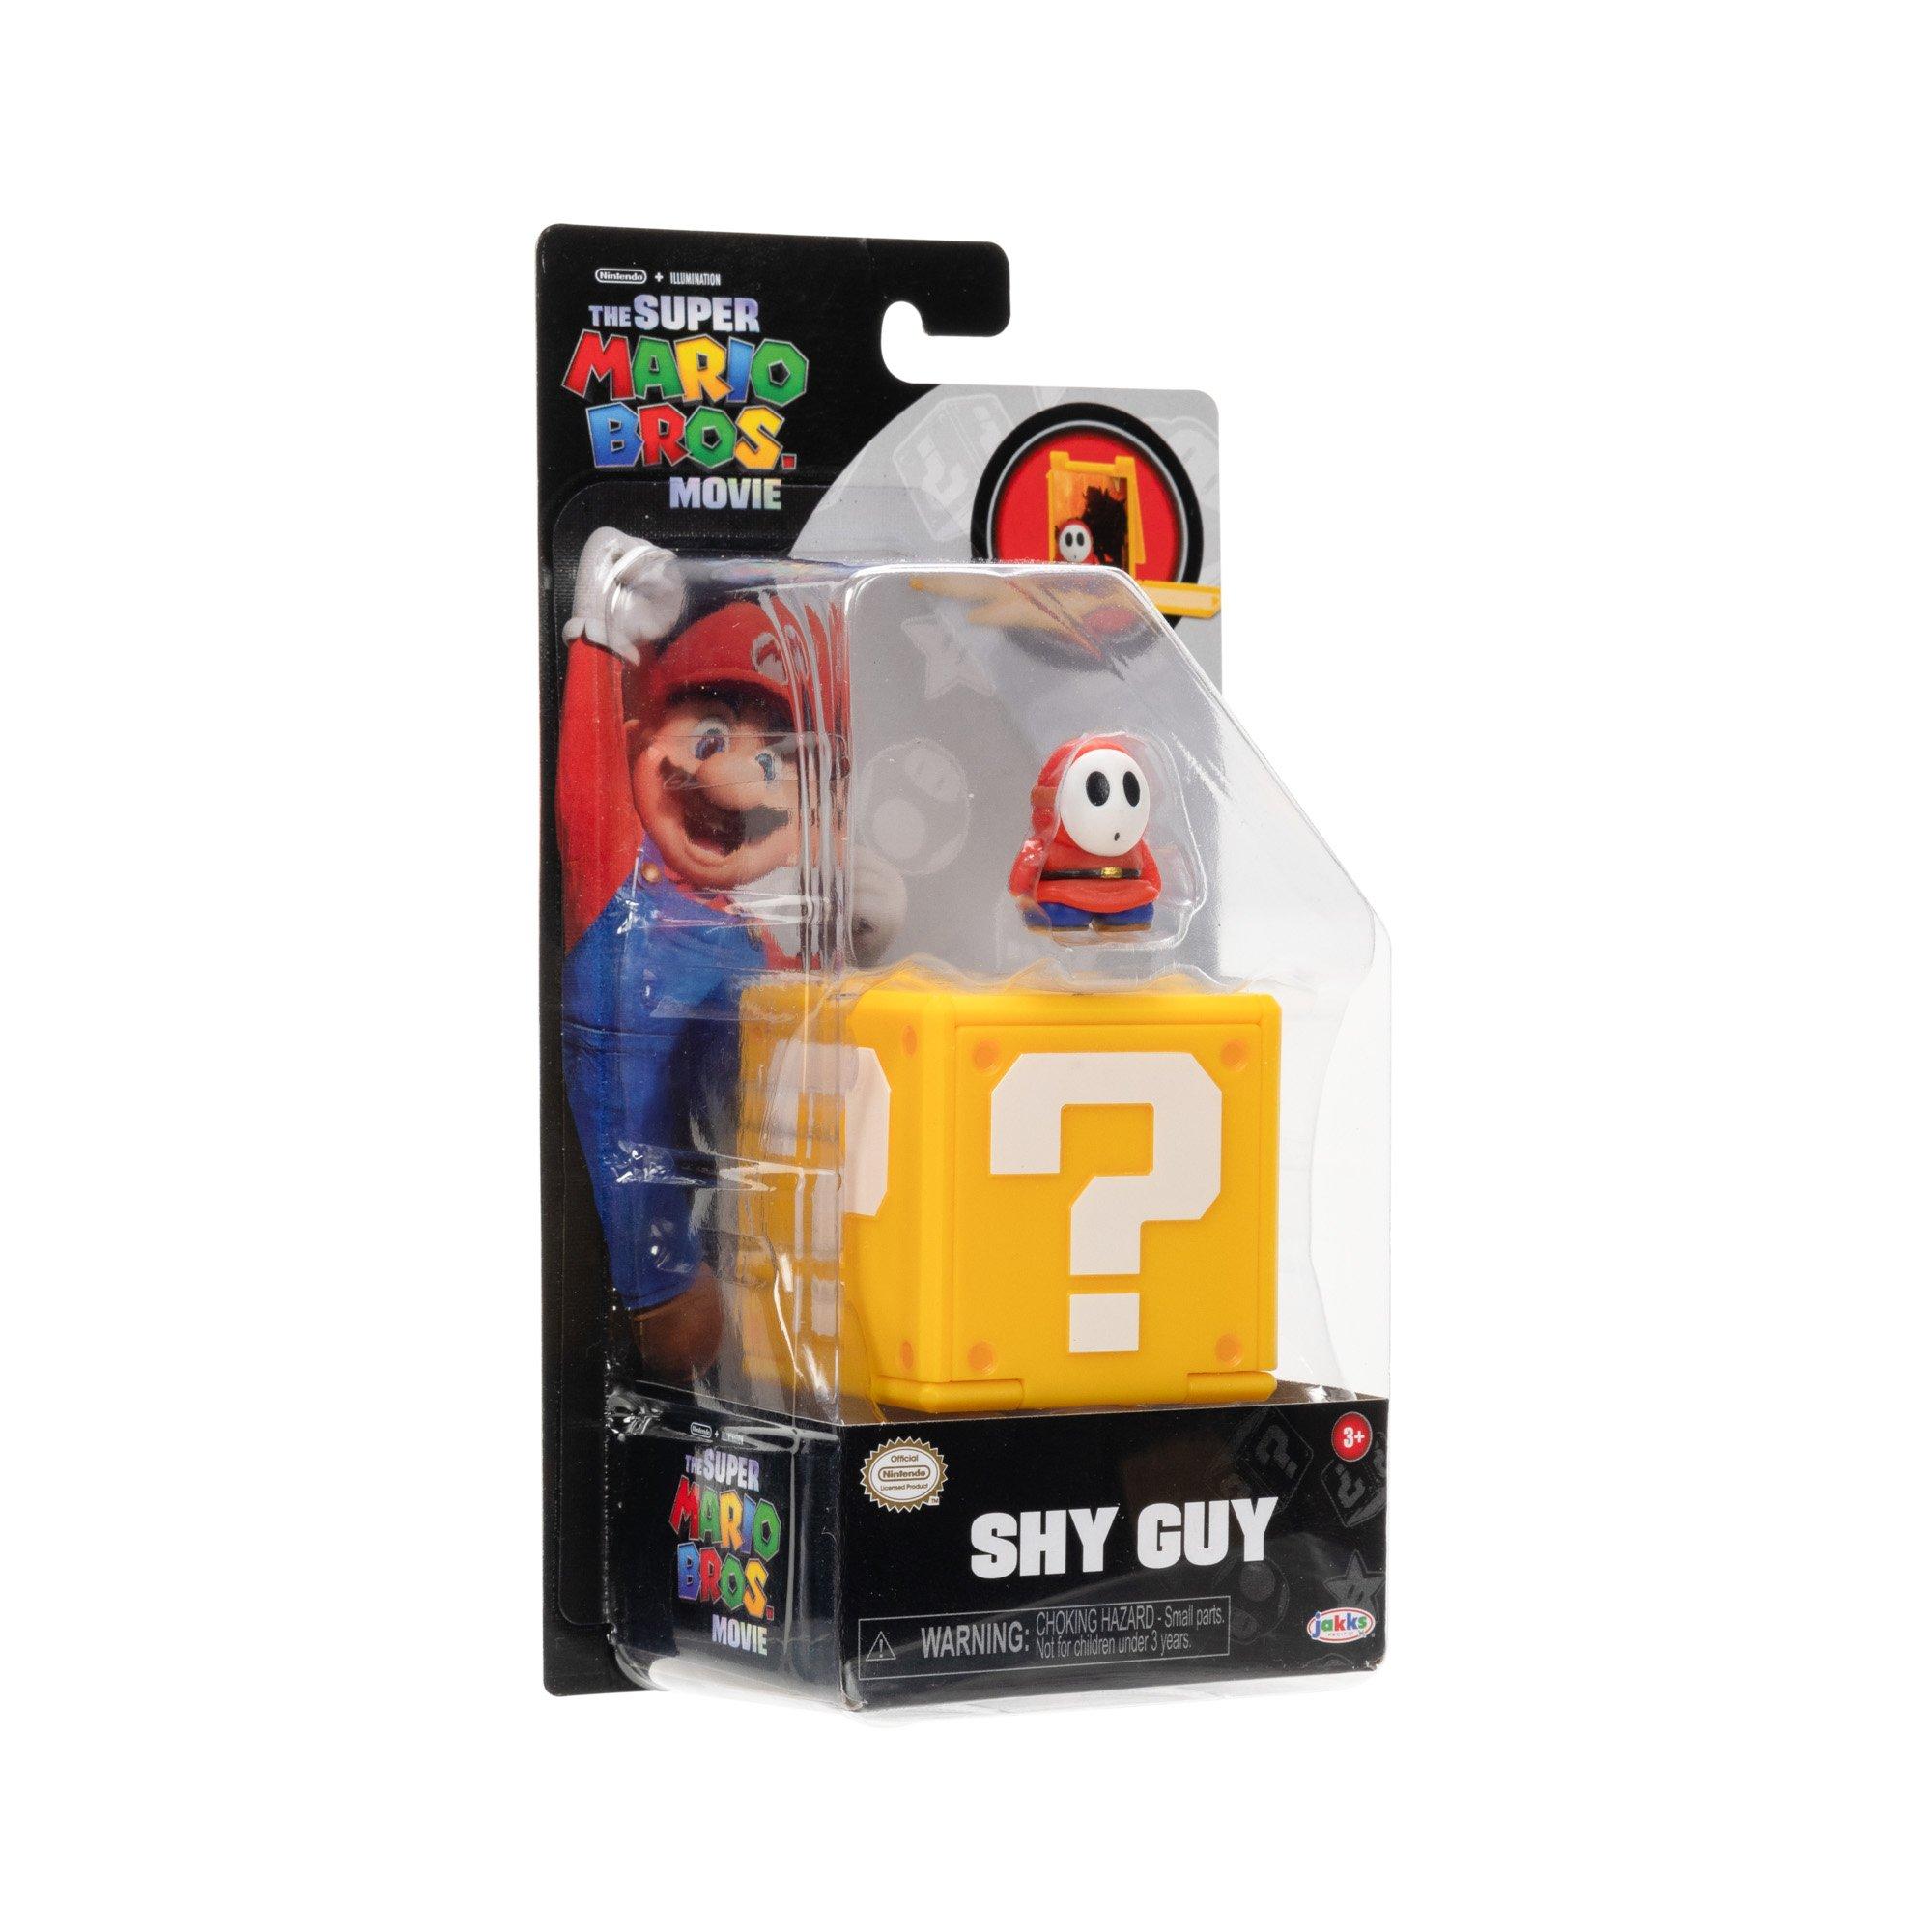 https://media.gamestop.com/i/gamestop/20004253_ALT05/Jakks-Pacific-The-Super-Mario-Bros.-Movie-Shy-Guy-1.25-in-Mini-Figure?$pdp$